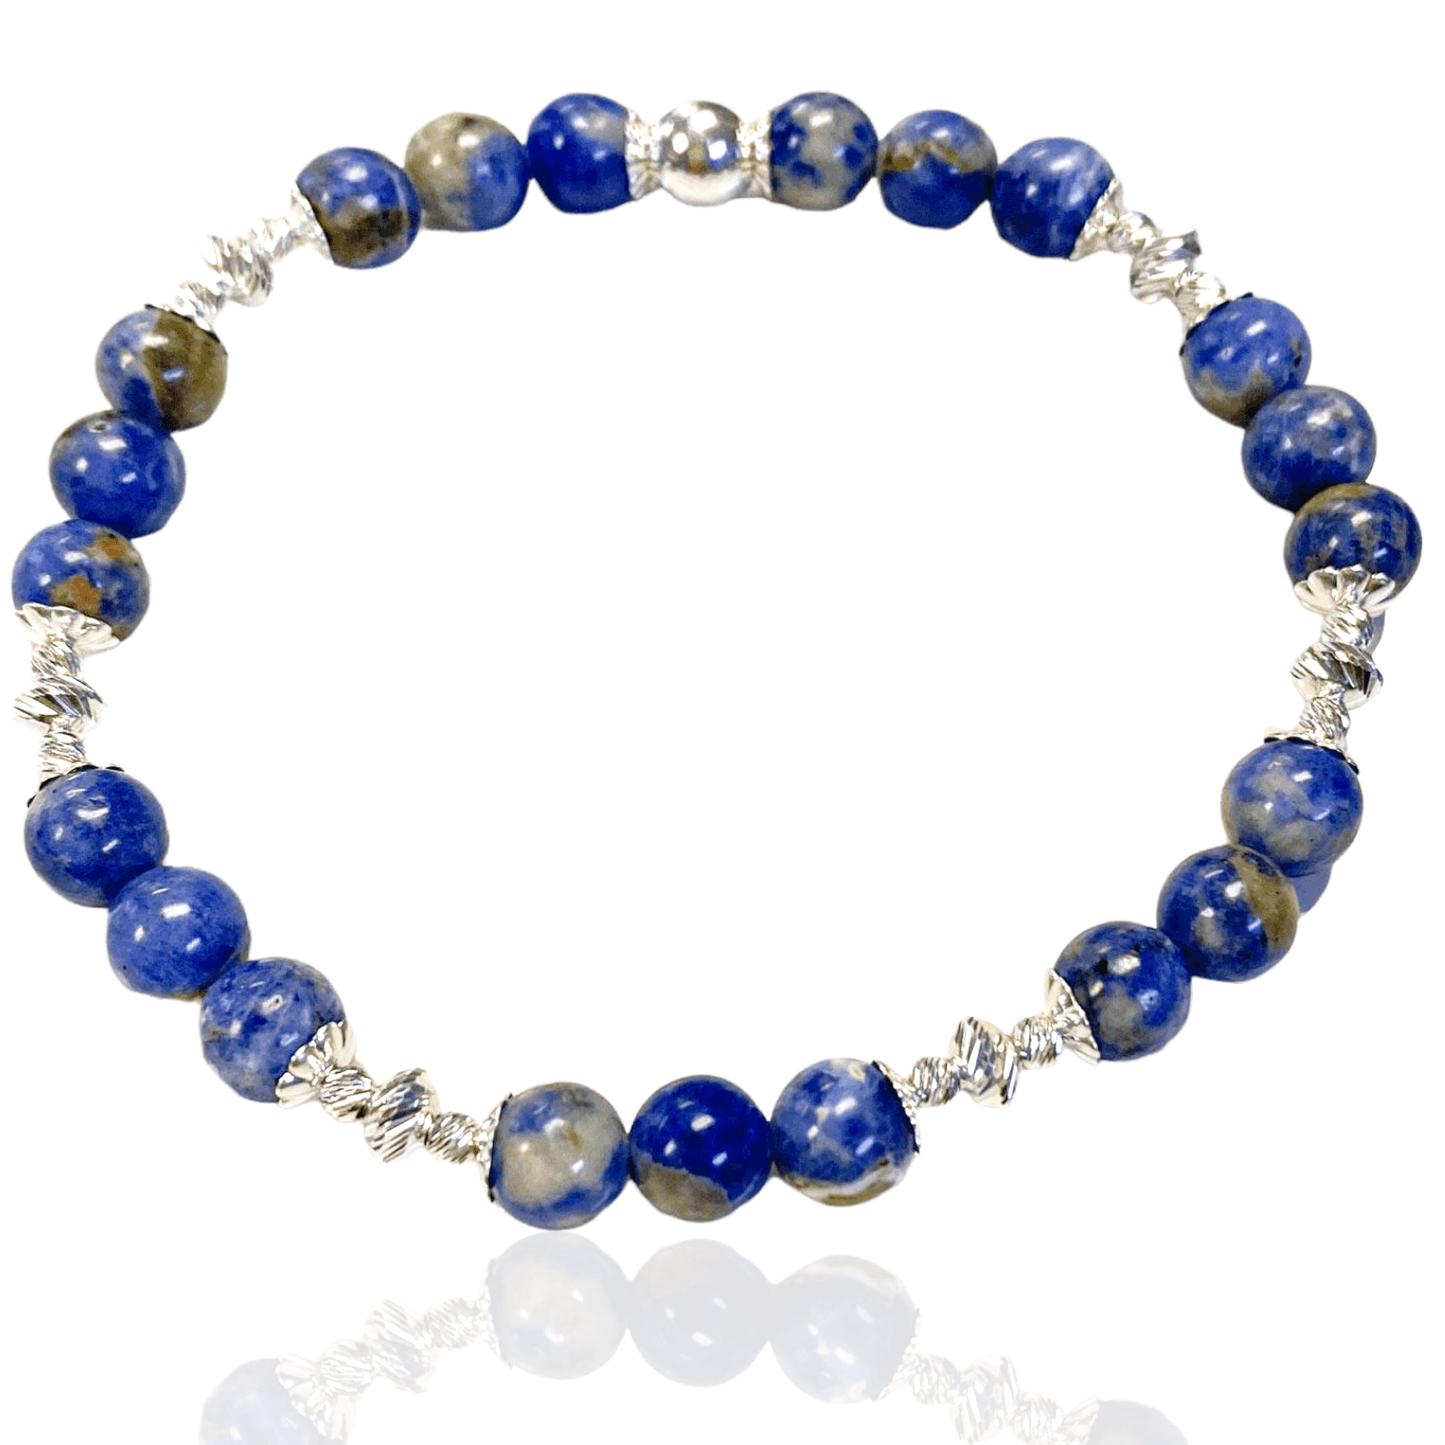 Gemstone Stack Bracelet Kit - Too Cute Beads